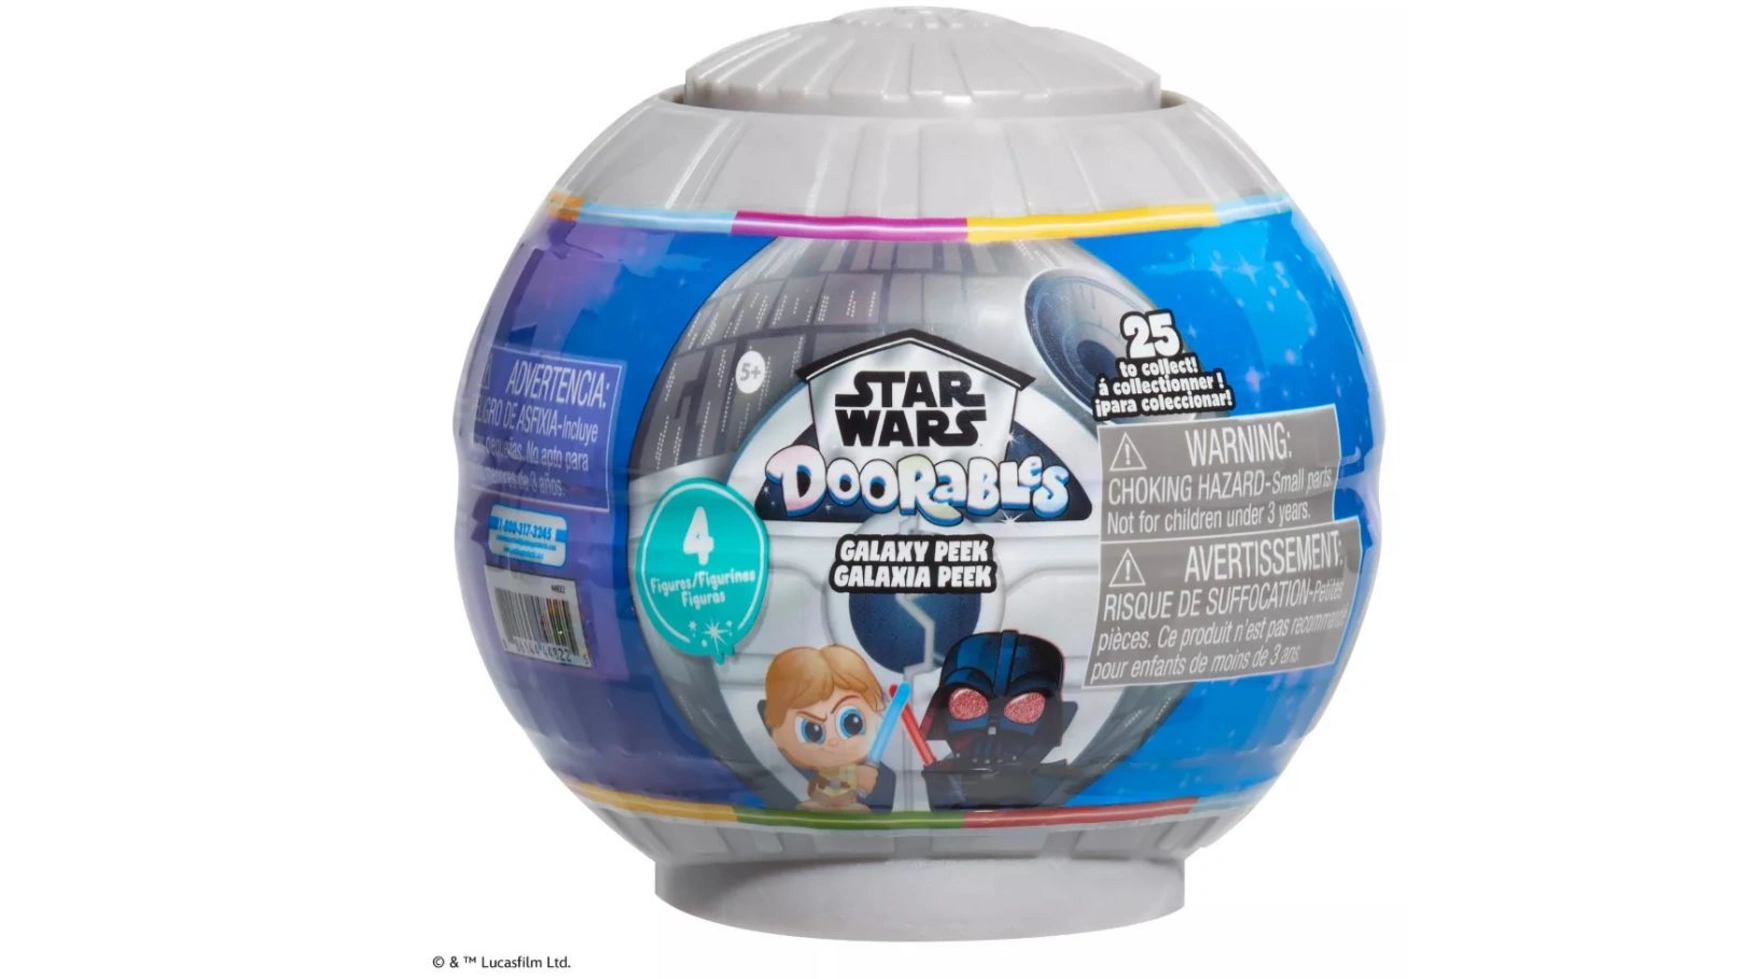 lego star wars 75246 пушка звезды смерти 159 дет Just Play Disney Doorables Star Wars Galaxy Peek